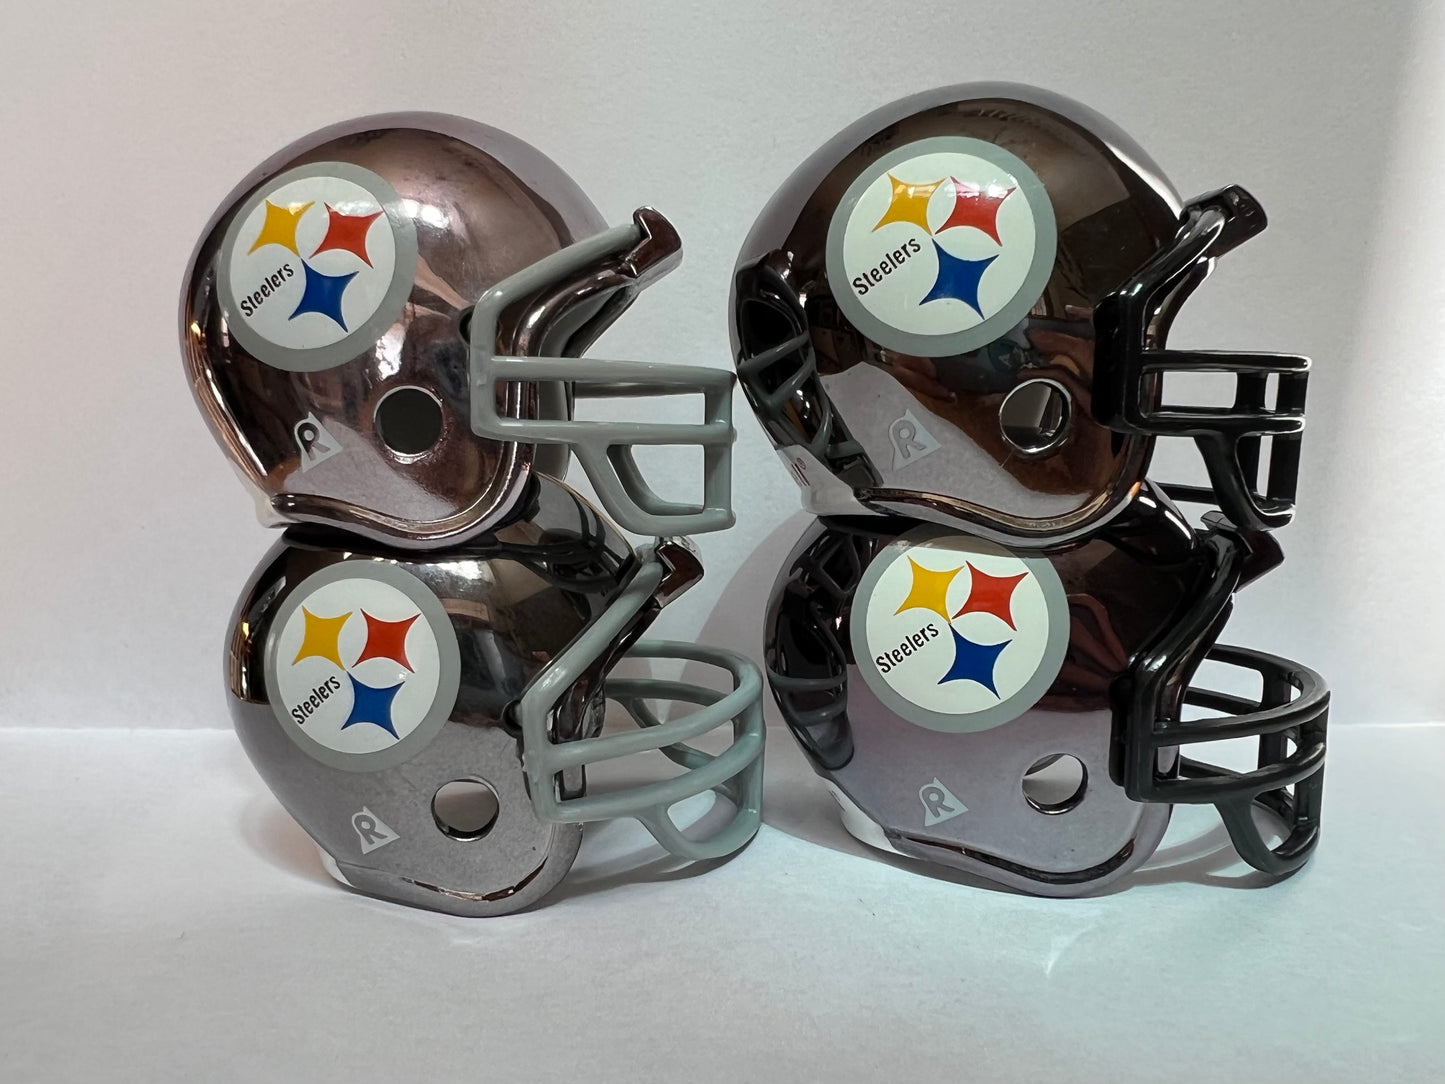 Pittsburgh Steelers Riddell NFL Pocket Pro Helmets Super Bowl IX, X, XIII, and XIV Championship Chrome (4 Helmets)  WESTBROOKSPORTSCARDS   